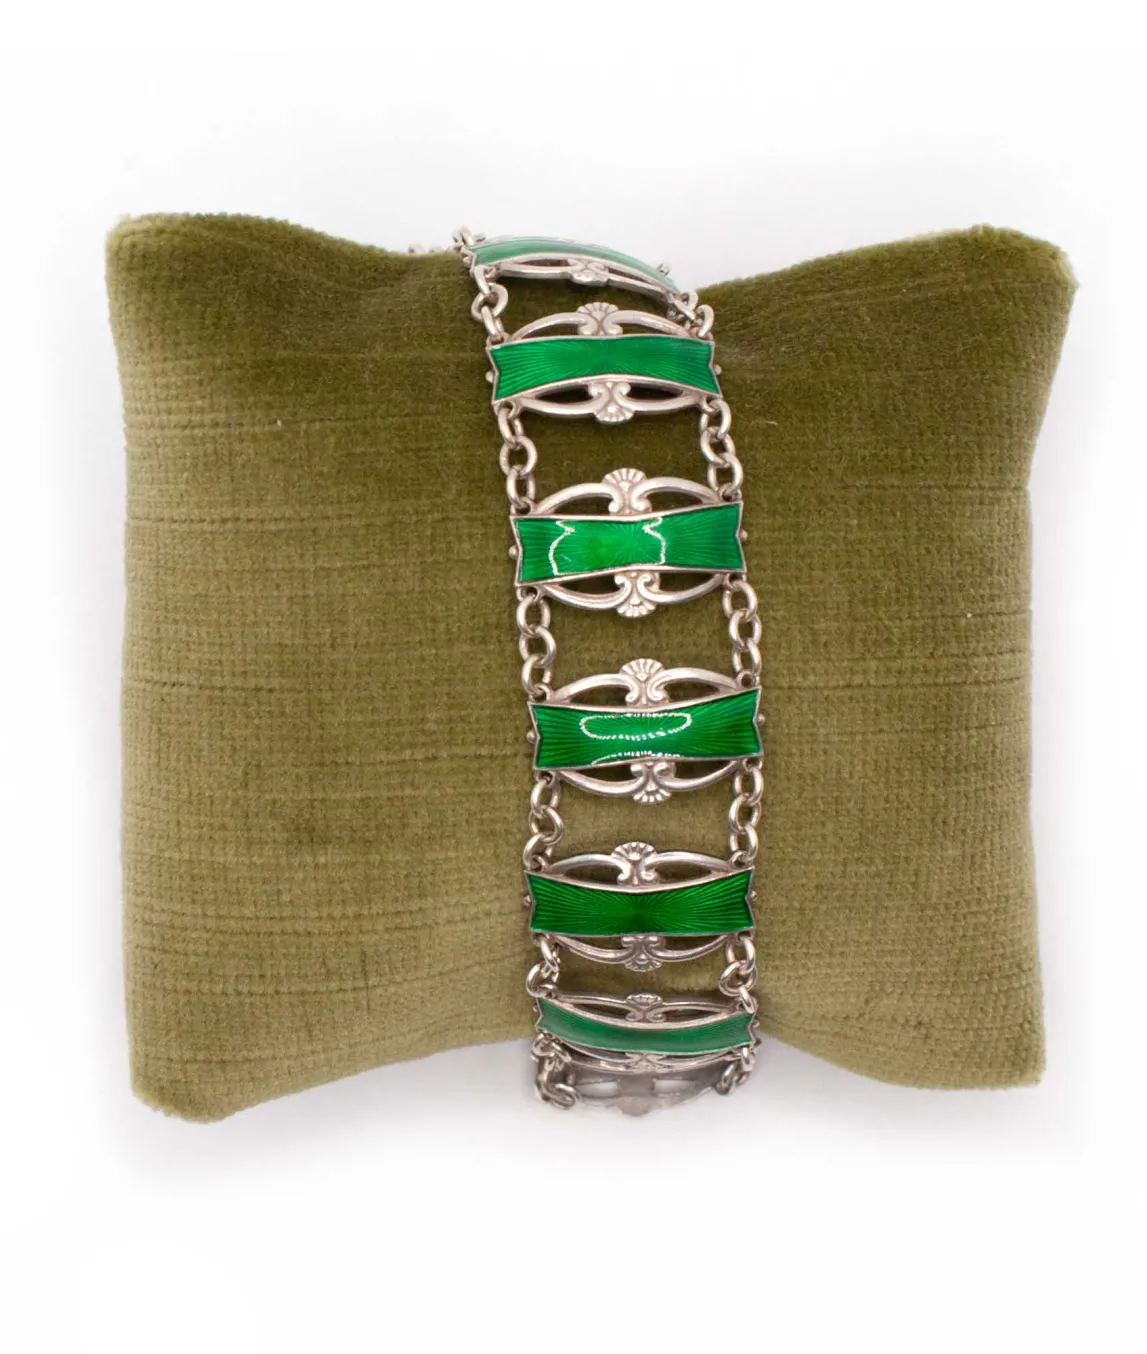 Emerald green enamel on sterling silver vintage bracelet wrapped around green pillow